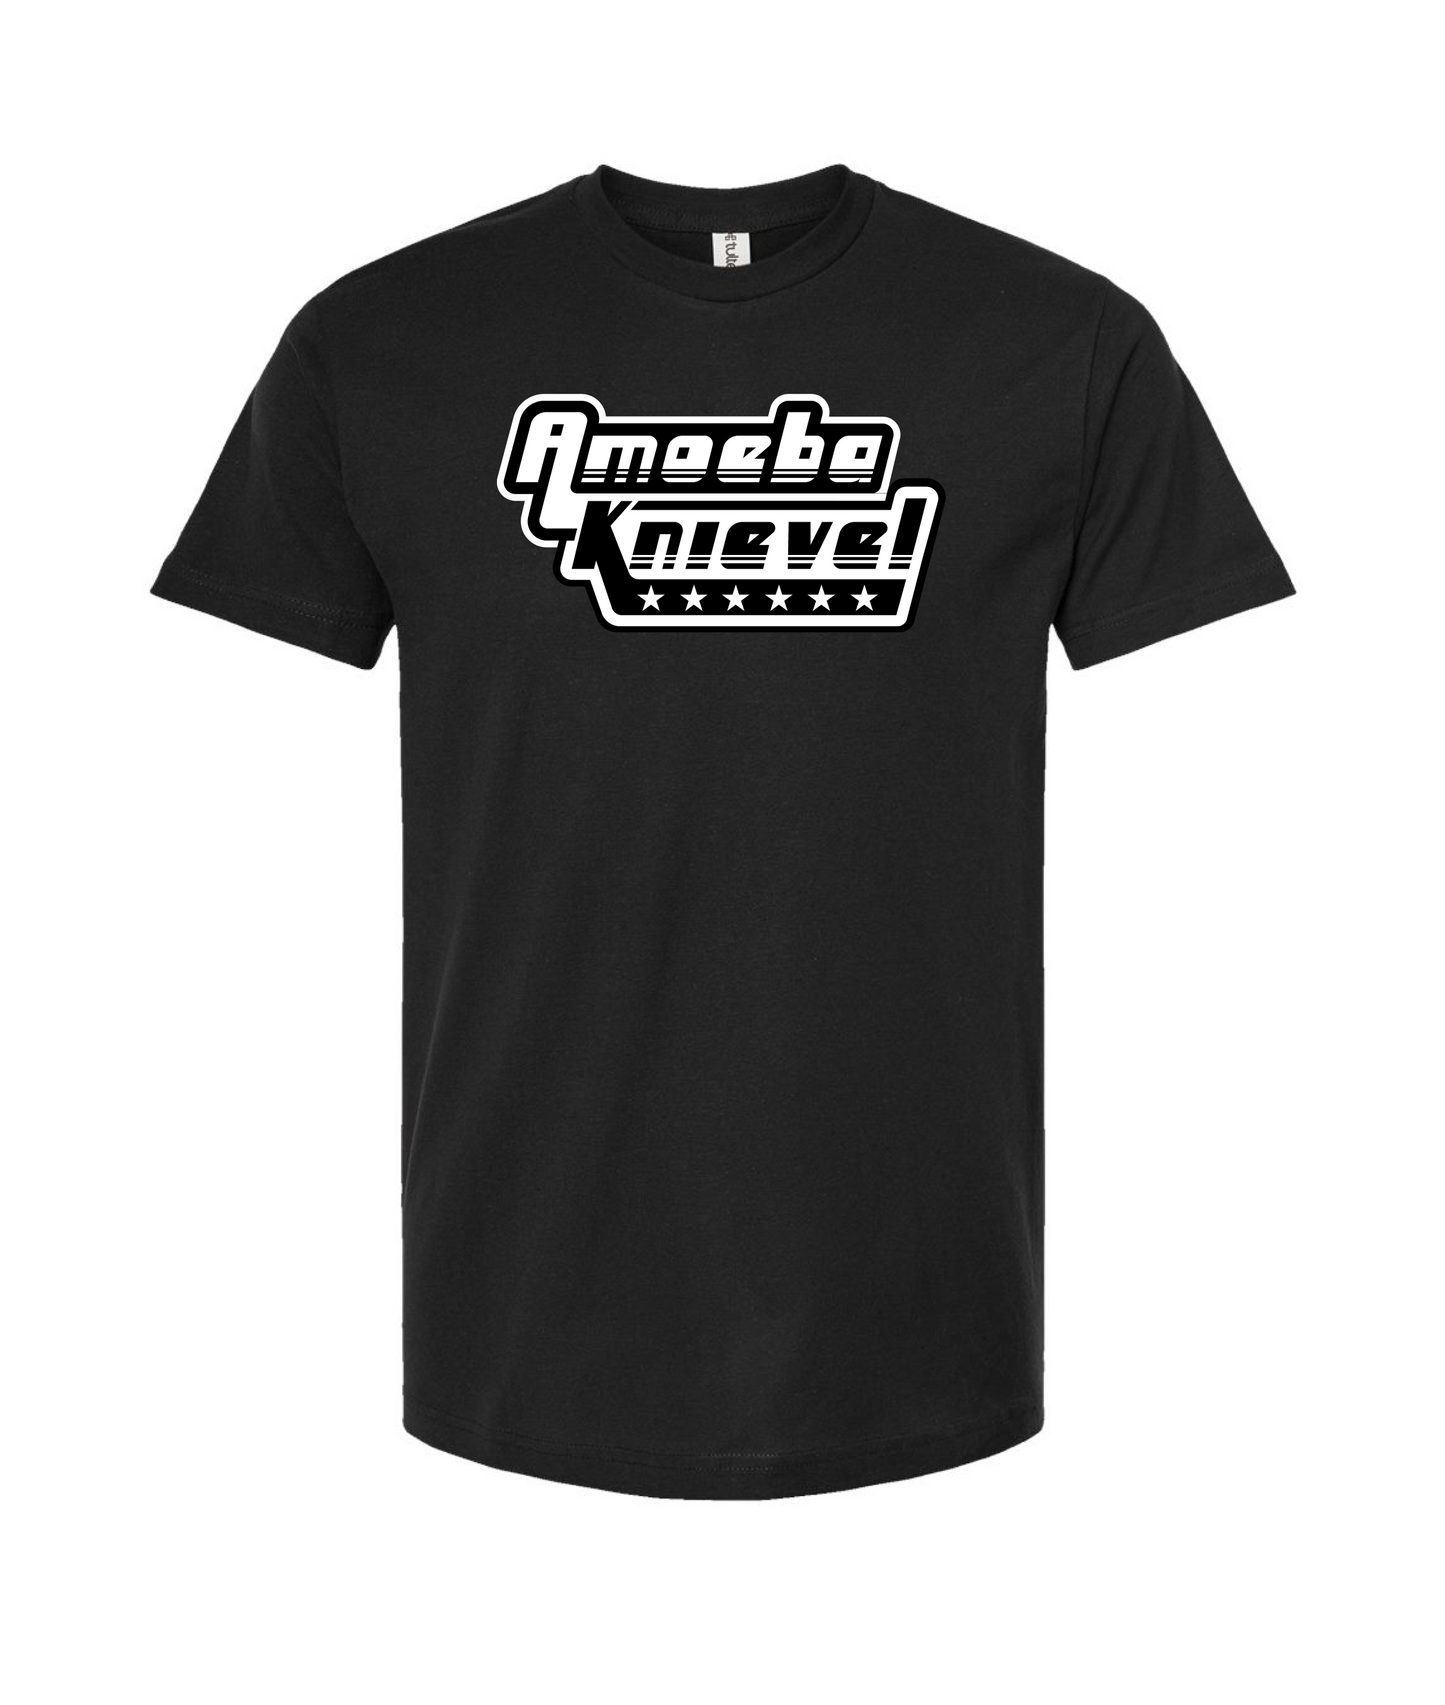 Amoeba Knievel Merch 'N Stuff - Logo - Black T-Shirt